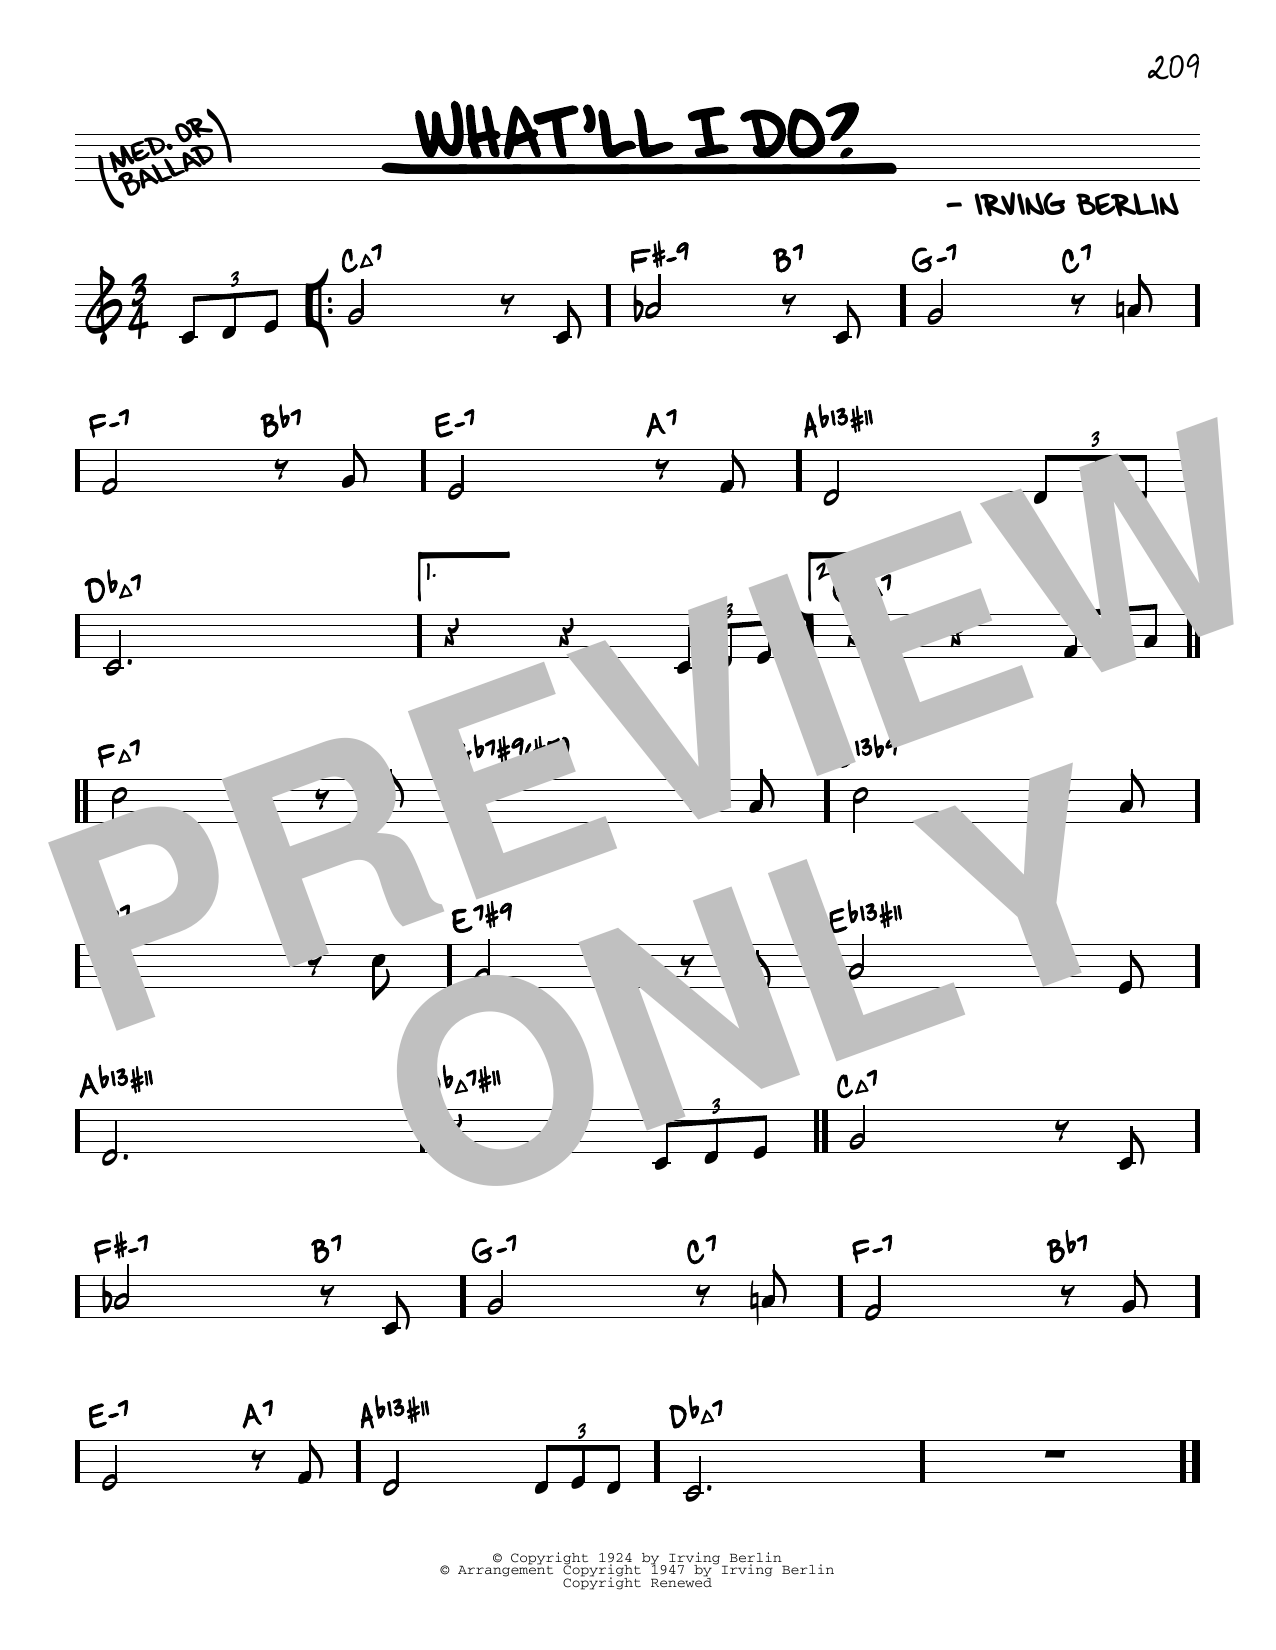 Irving Berlin What'll I Do? (arr. David Hazeltine) Sheet Music Notes & Chords for Real Book – Enhanced Chords - Download or Print PDF